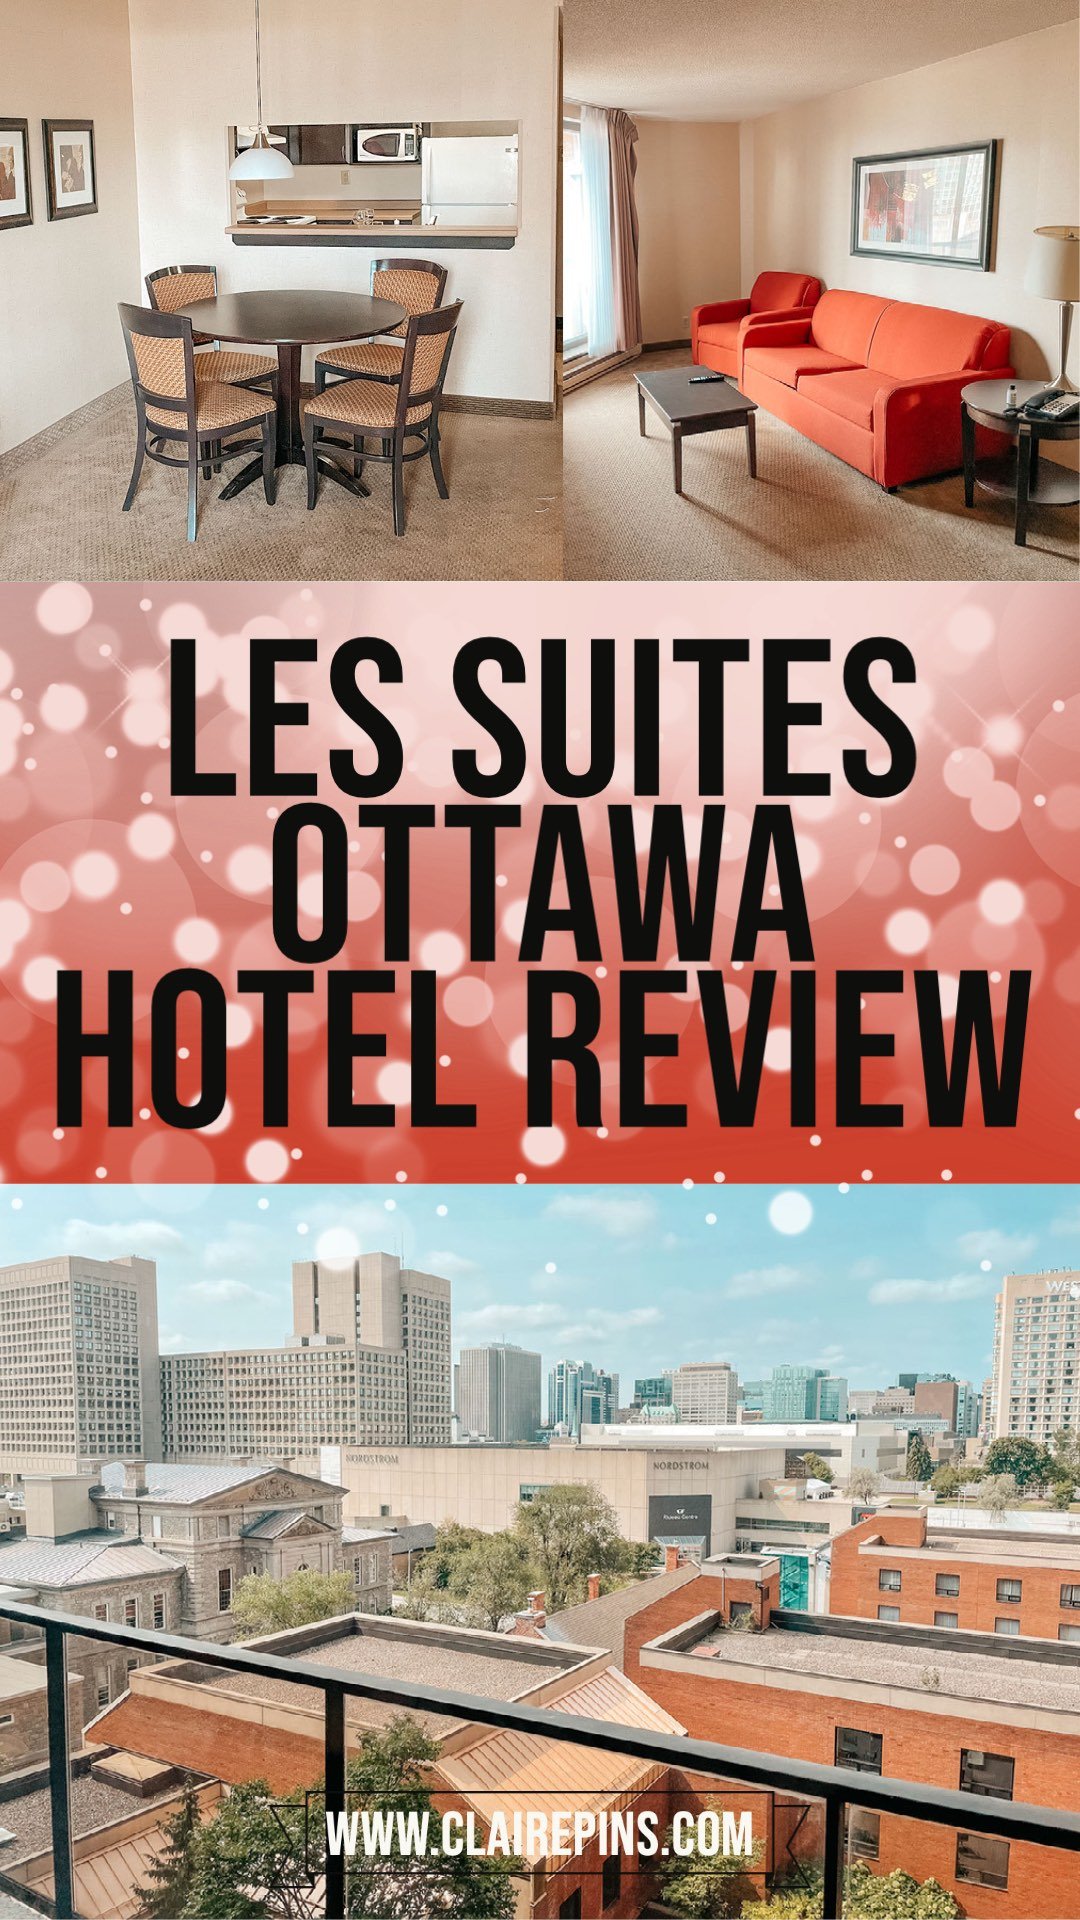 Les Suites Hotel Ottawa Review copy.jpg